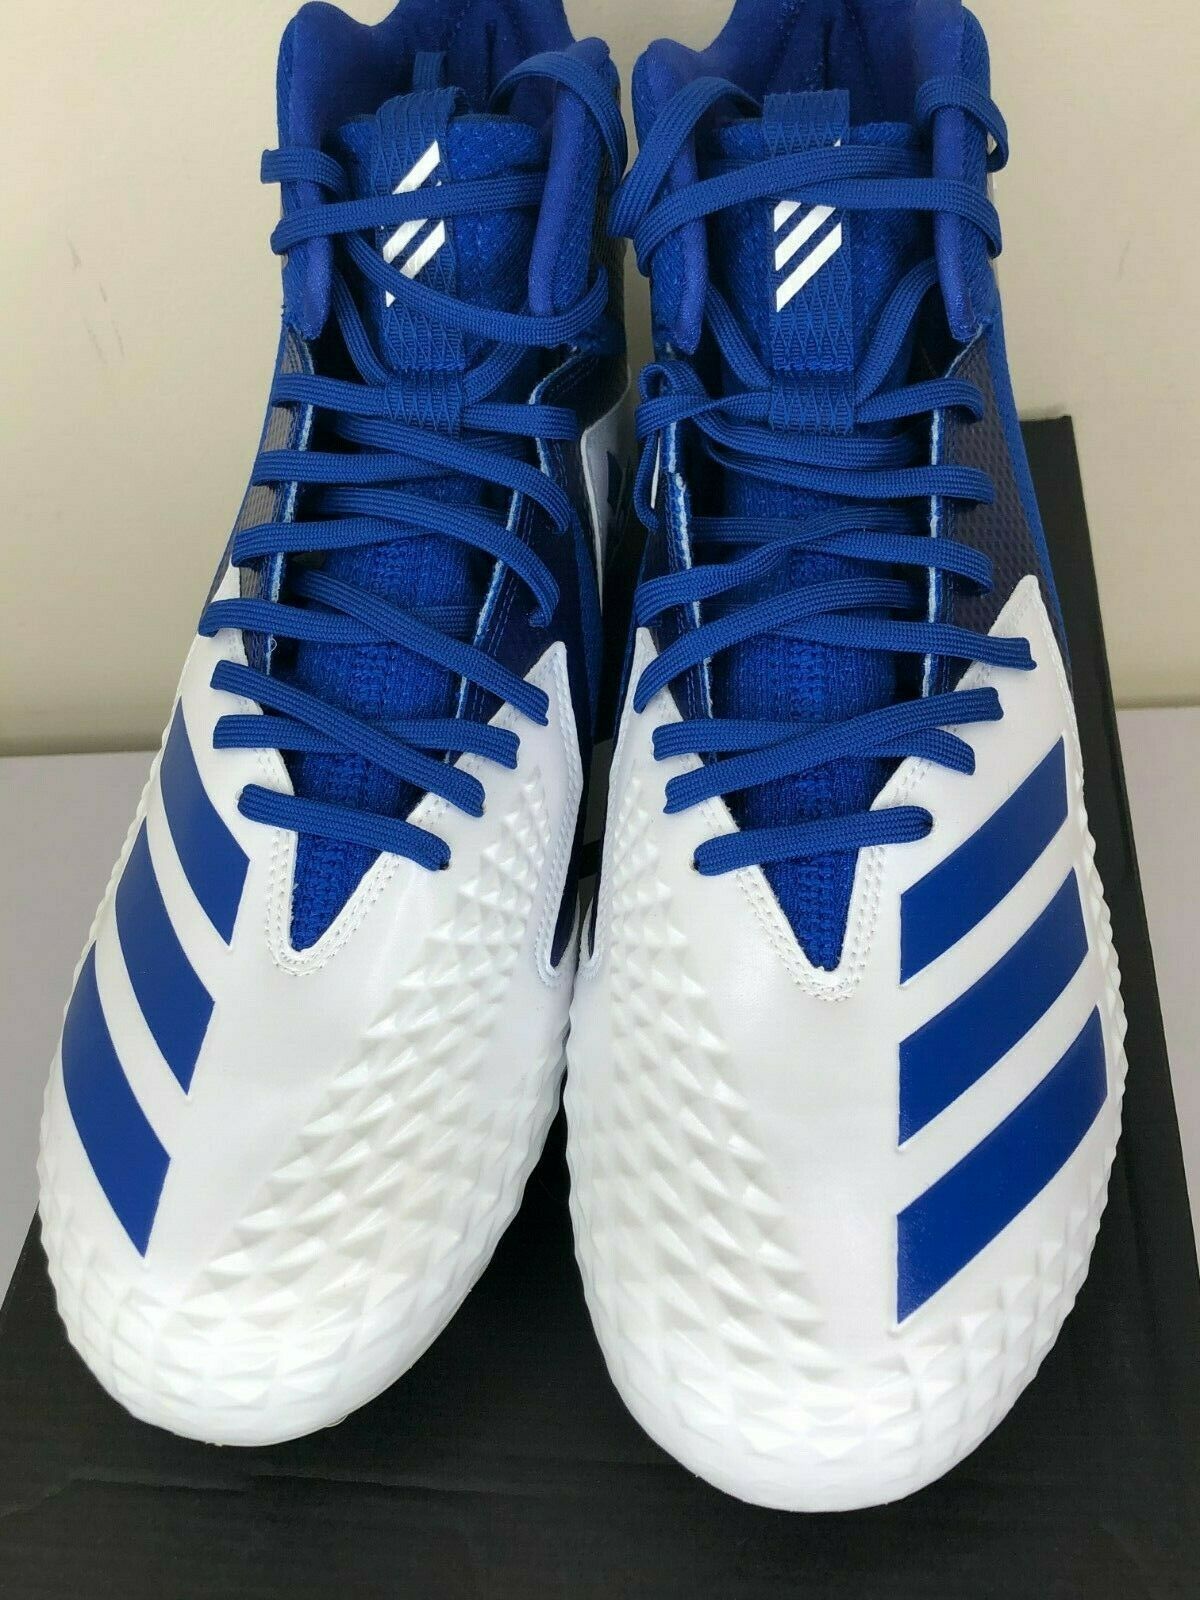 Adidas Freak X Carbon Mid Football Cleats Blue/White B75559 Men's Sz 11